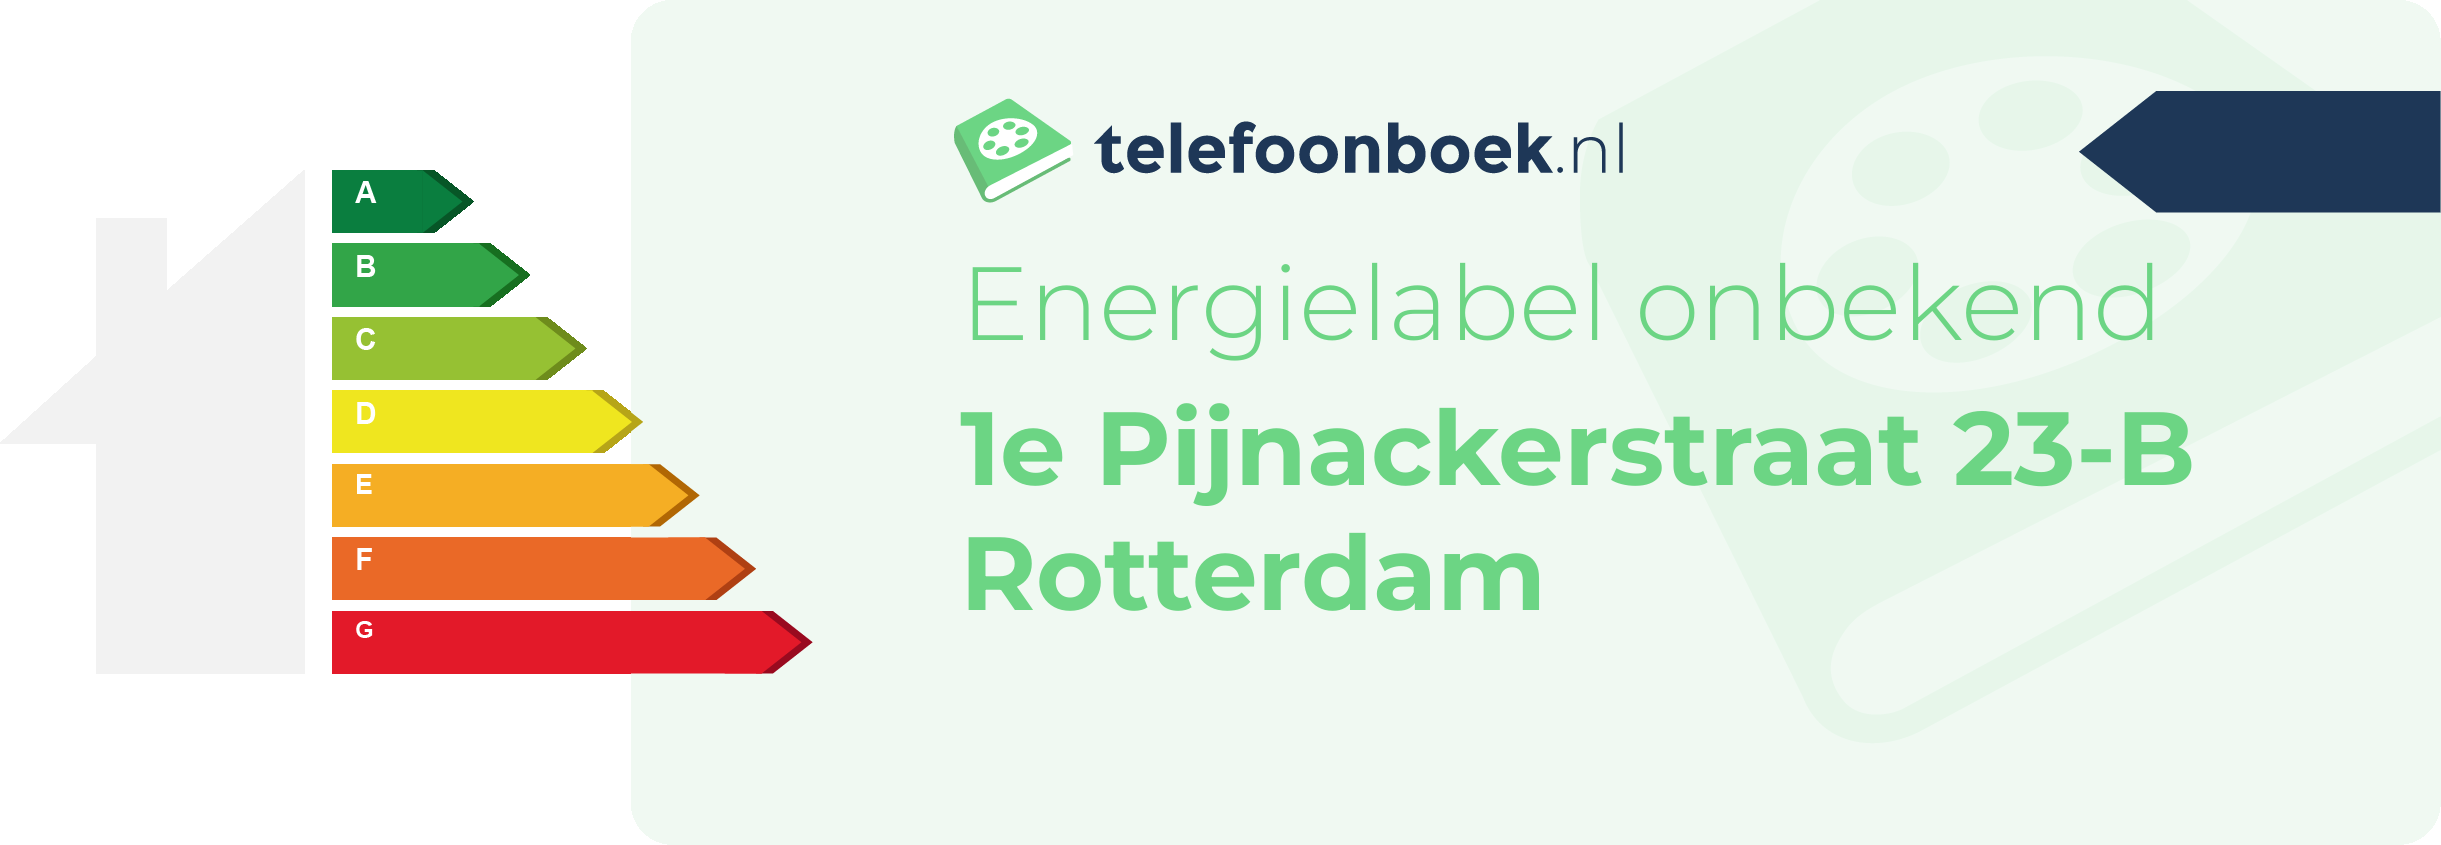 Energielabel 1e Pijnackerstraat 23-B Rotterdam